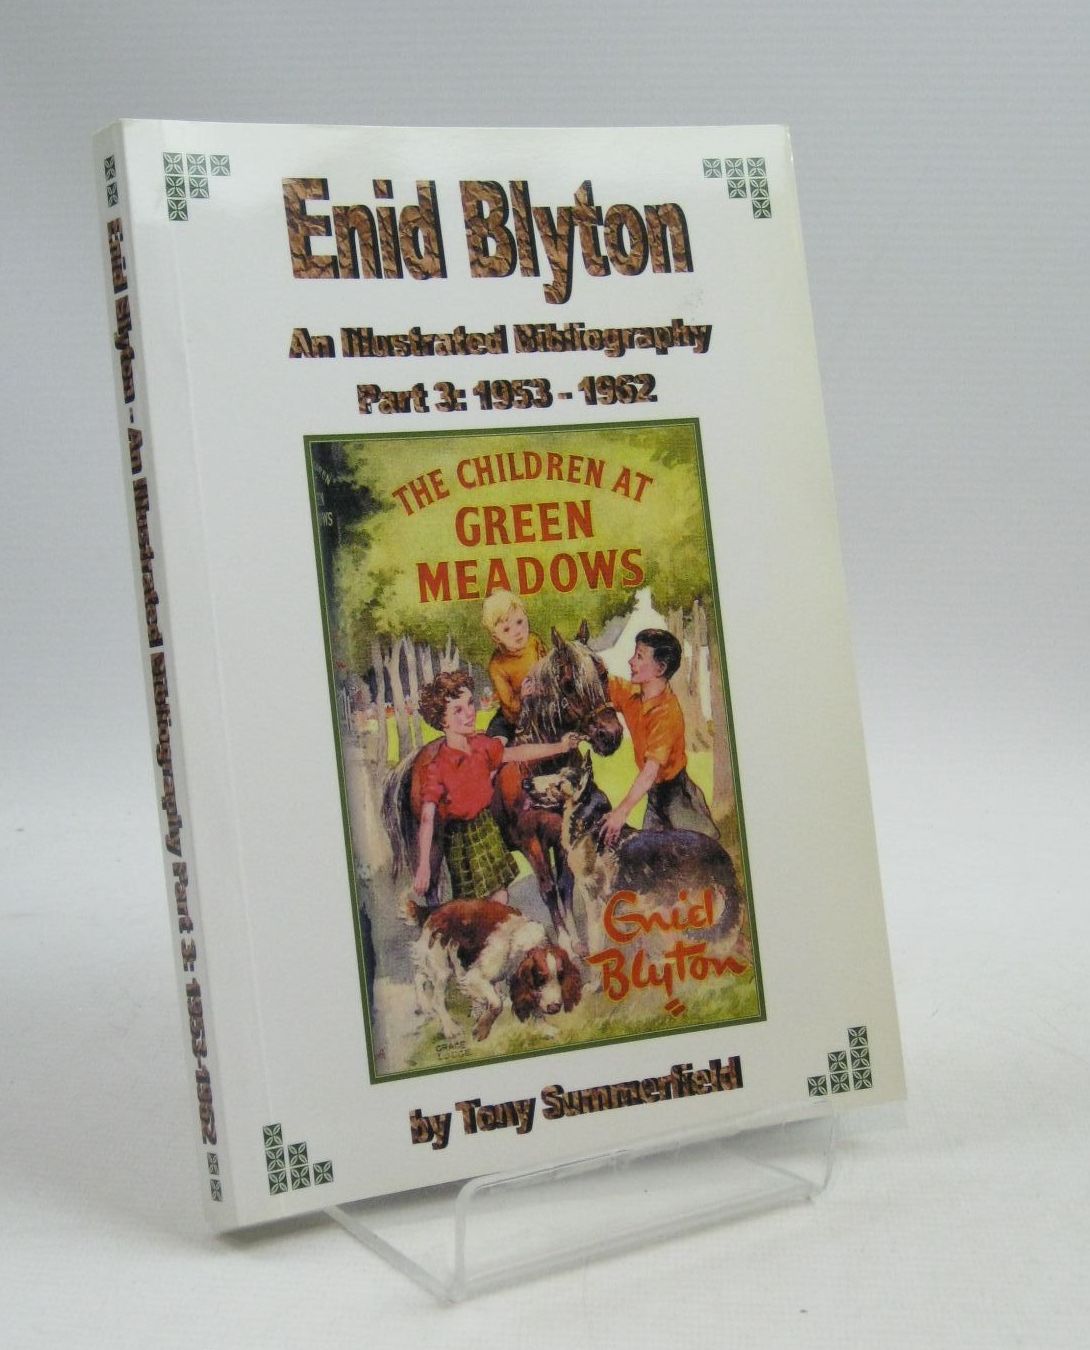 SUMMERFIELD, TONY - Enid Blyton an Illustrated Bibliography Part 3: 1953- 1962